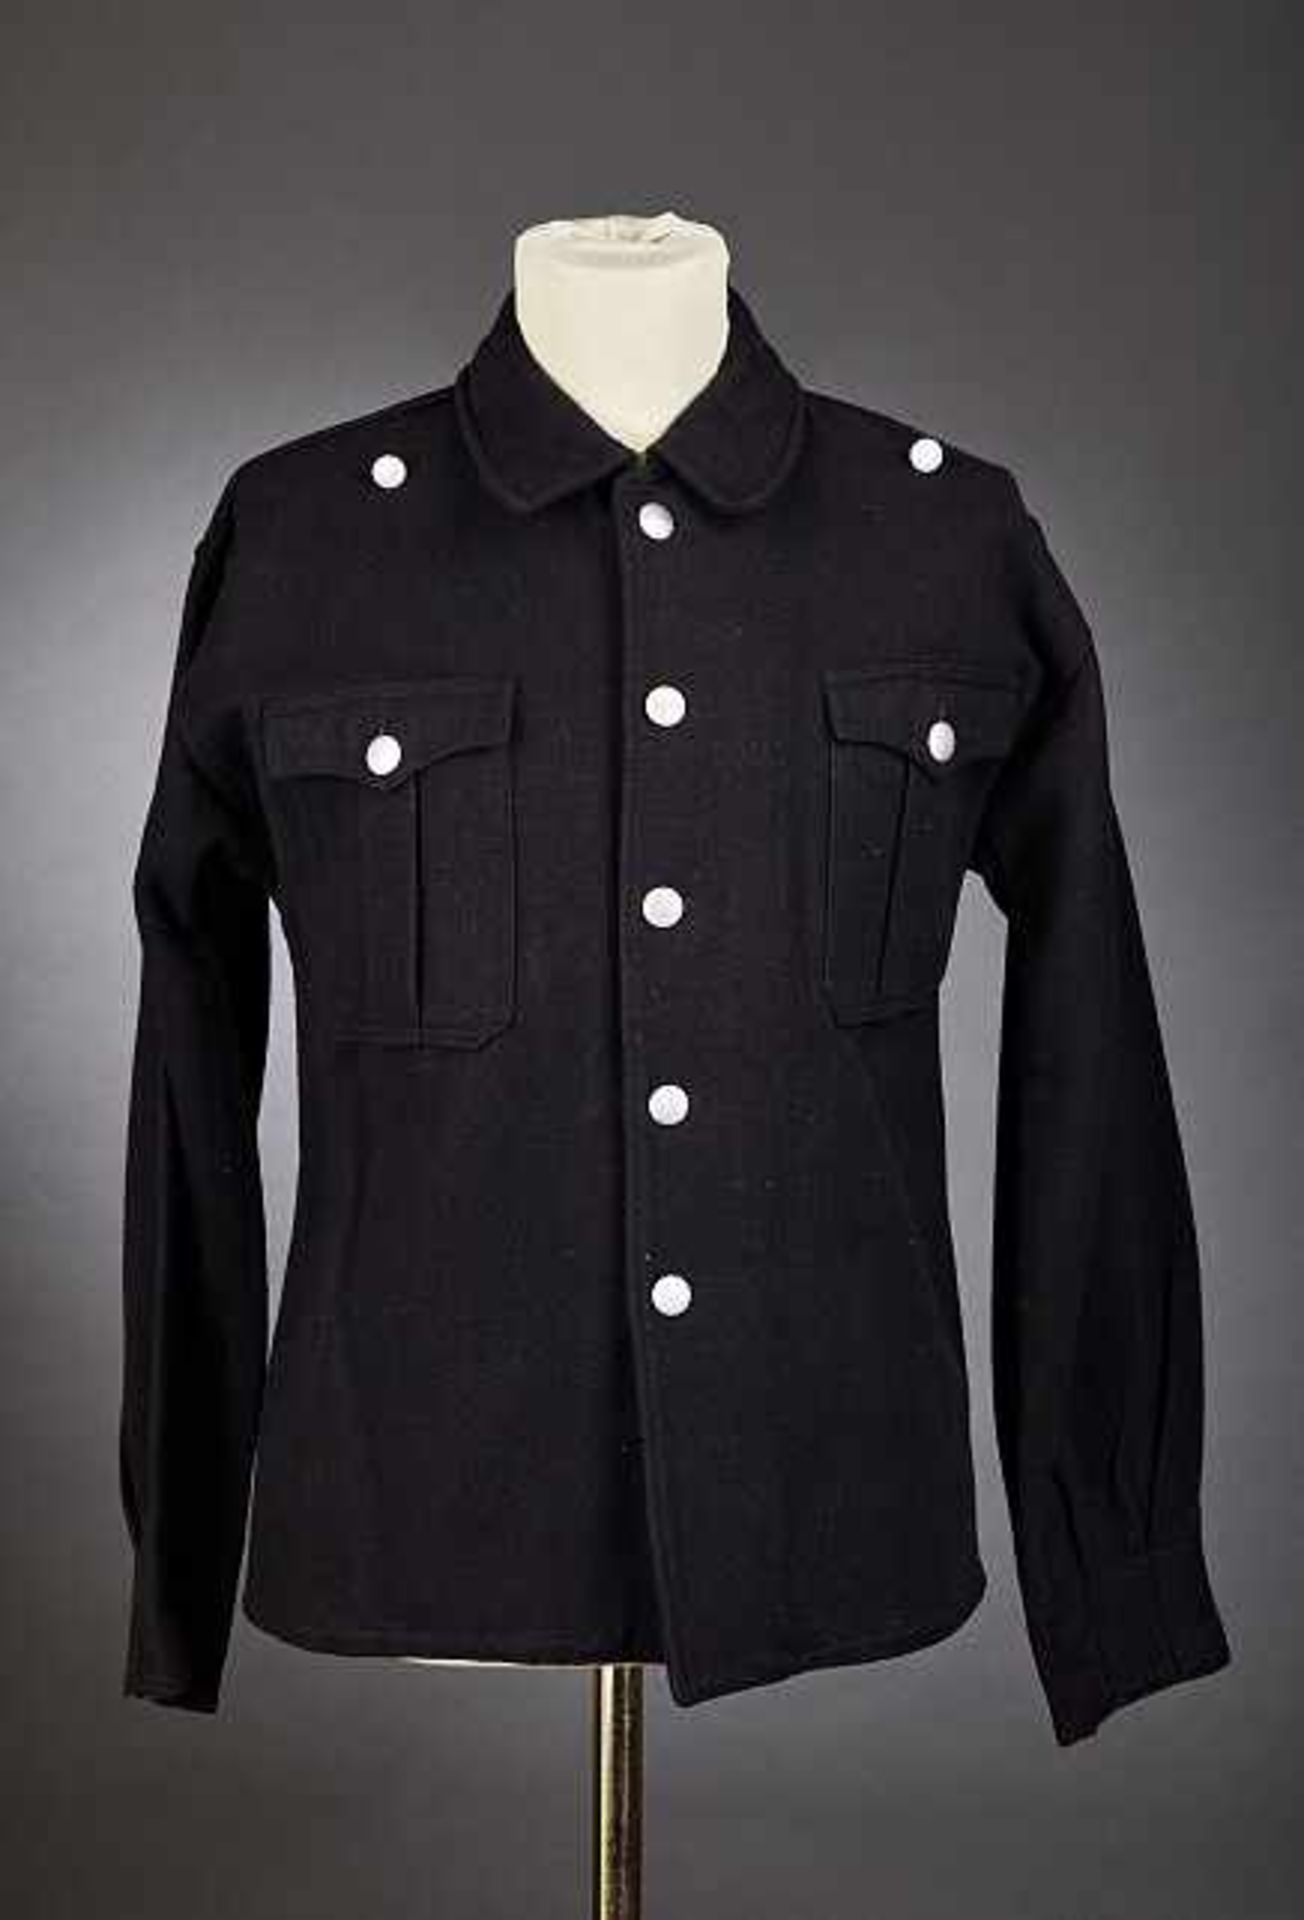 Deutsches Reich 1933 - 1945 - HJ - Hitlerjugend : HJ Winter Blouse.Shirt shows light wear/age with